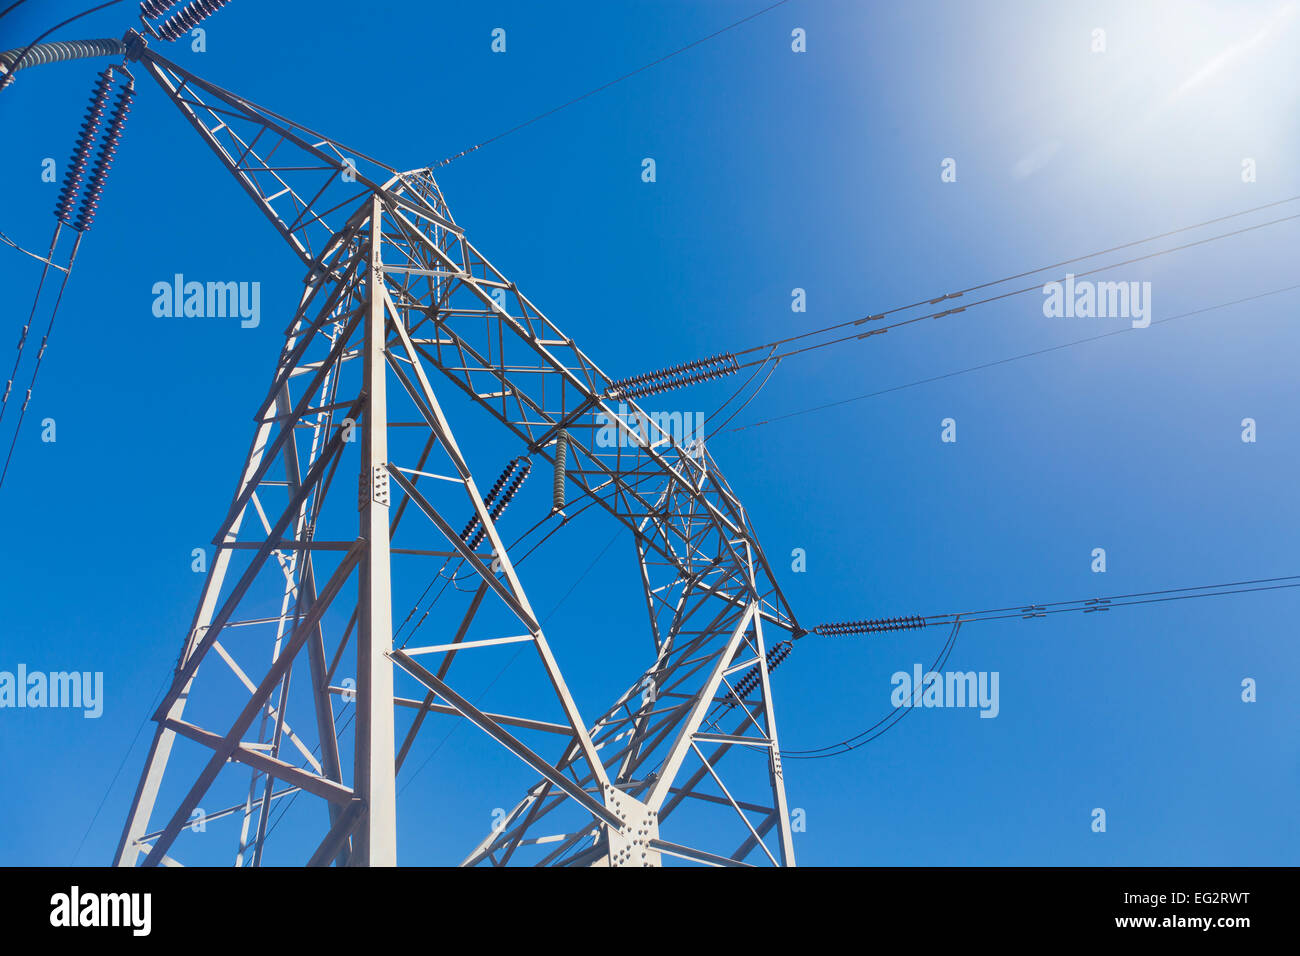 Electricity pylon against blue sky Stock Photo